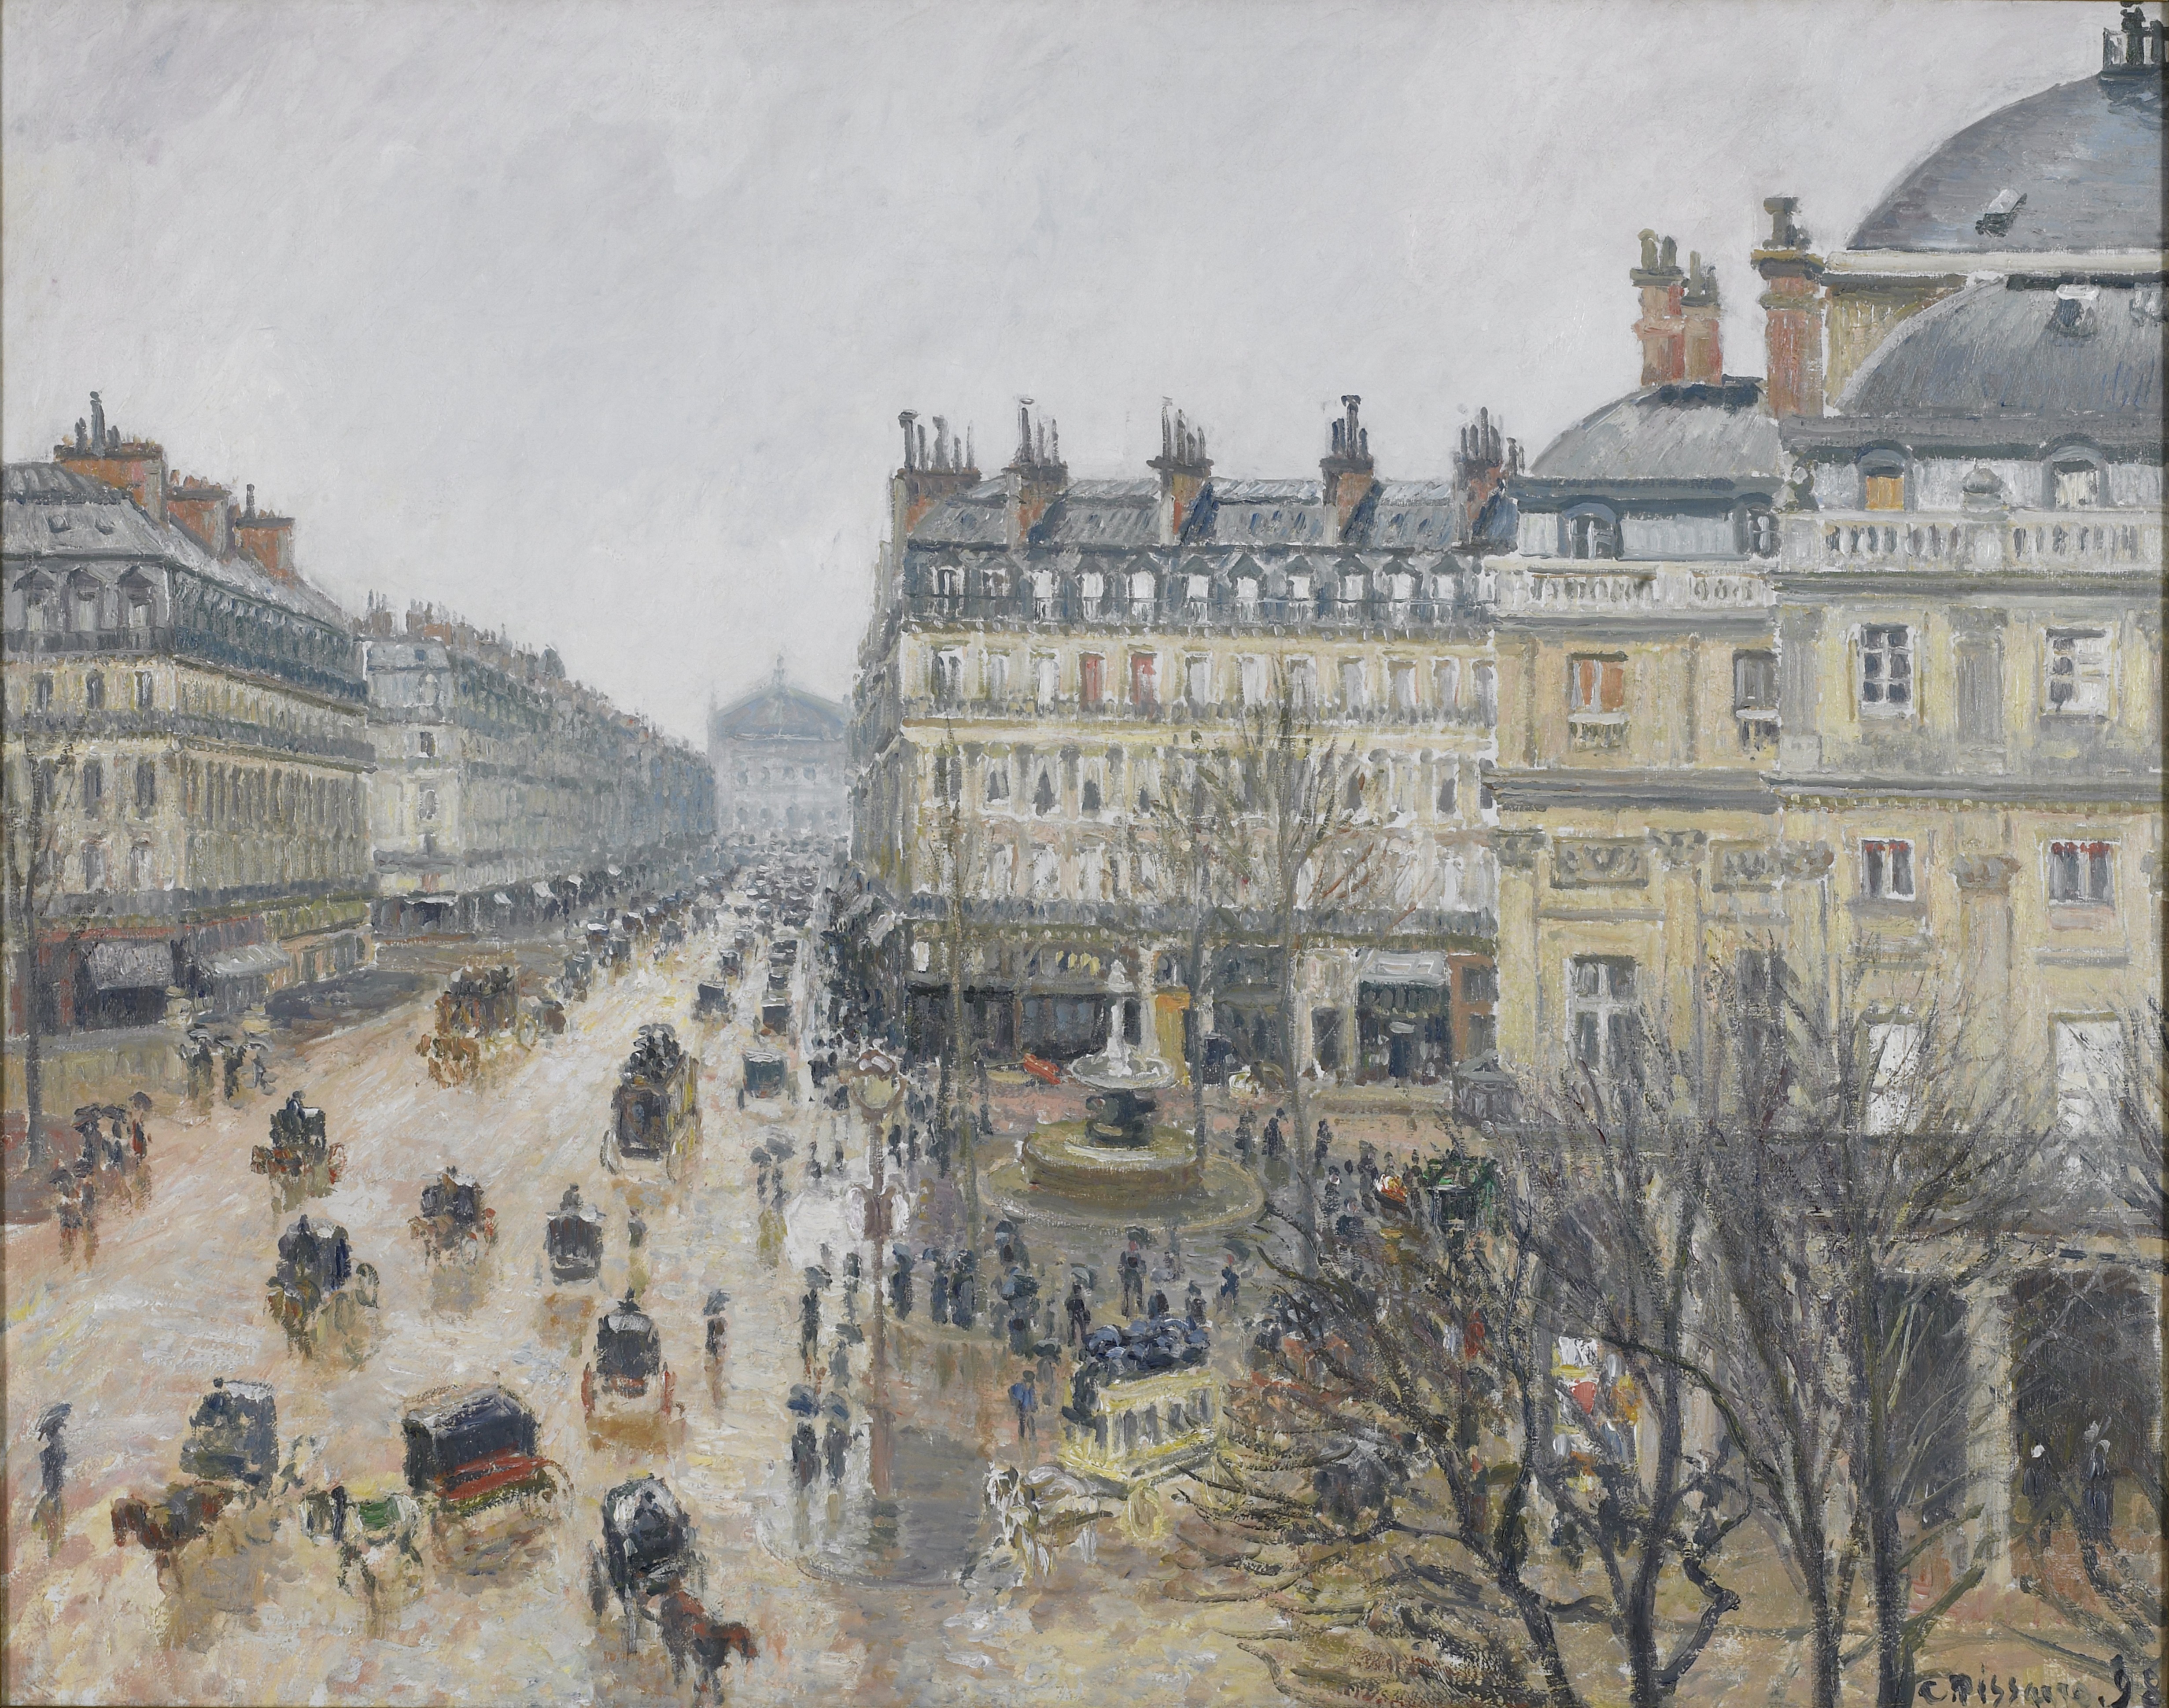 Camille Pissarro - Place du Thtre Franais, Paris Rain - 18.19 - Minneapolis Institute of Arts